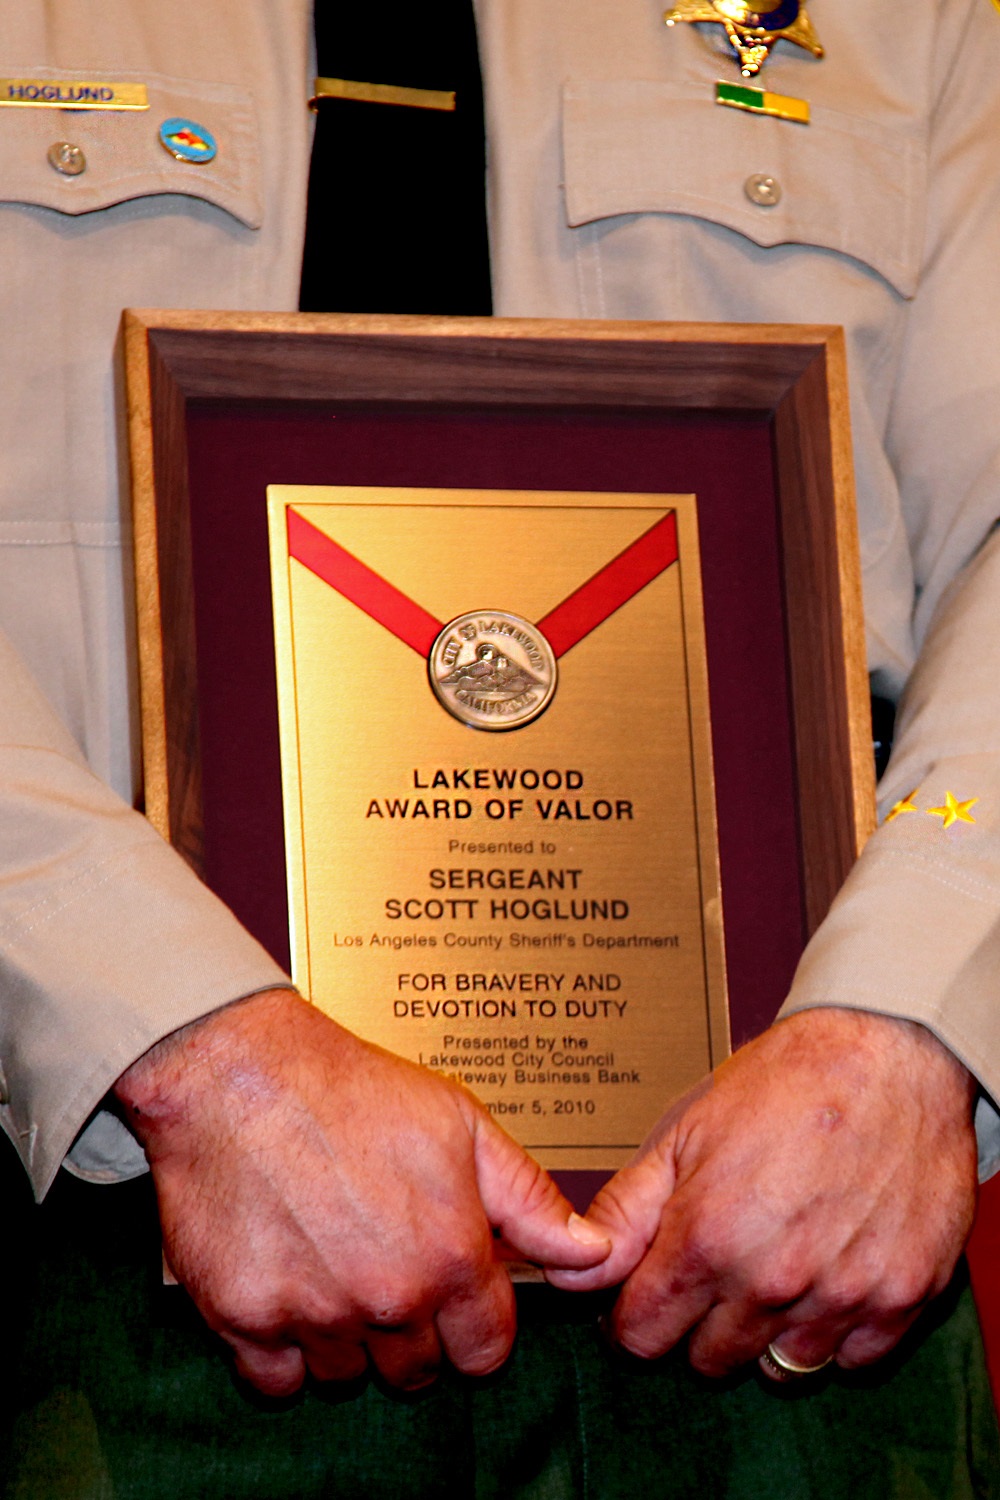 Award of Valor plaque presented to Sergeant Hoglund